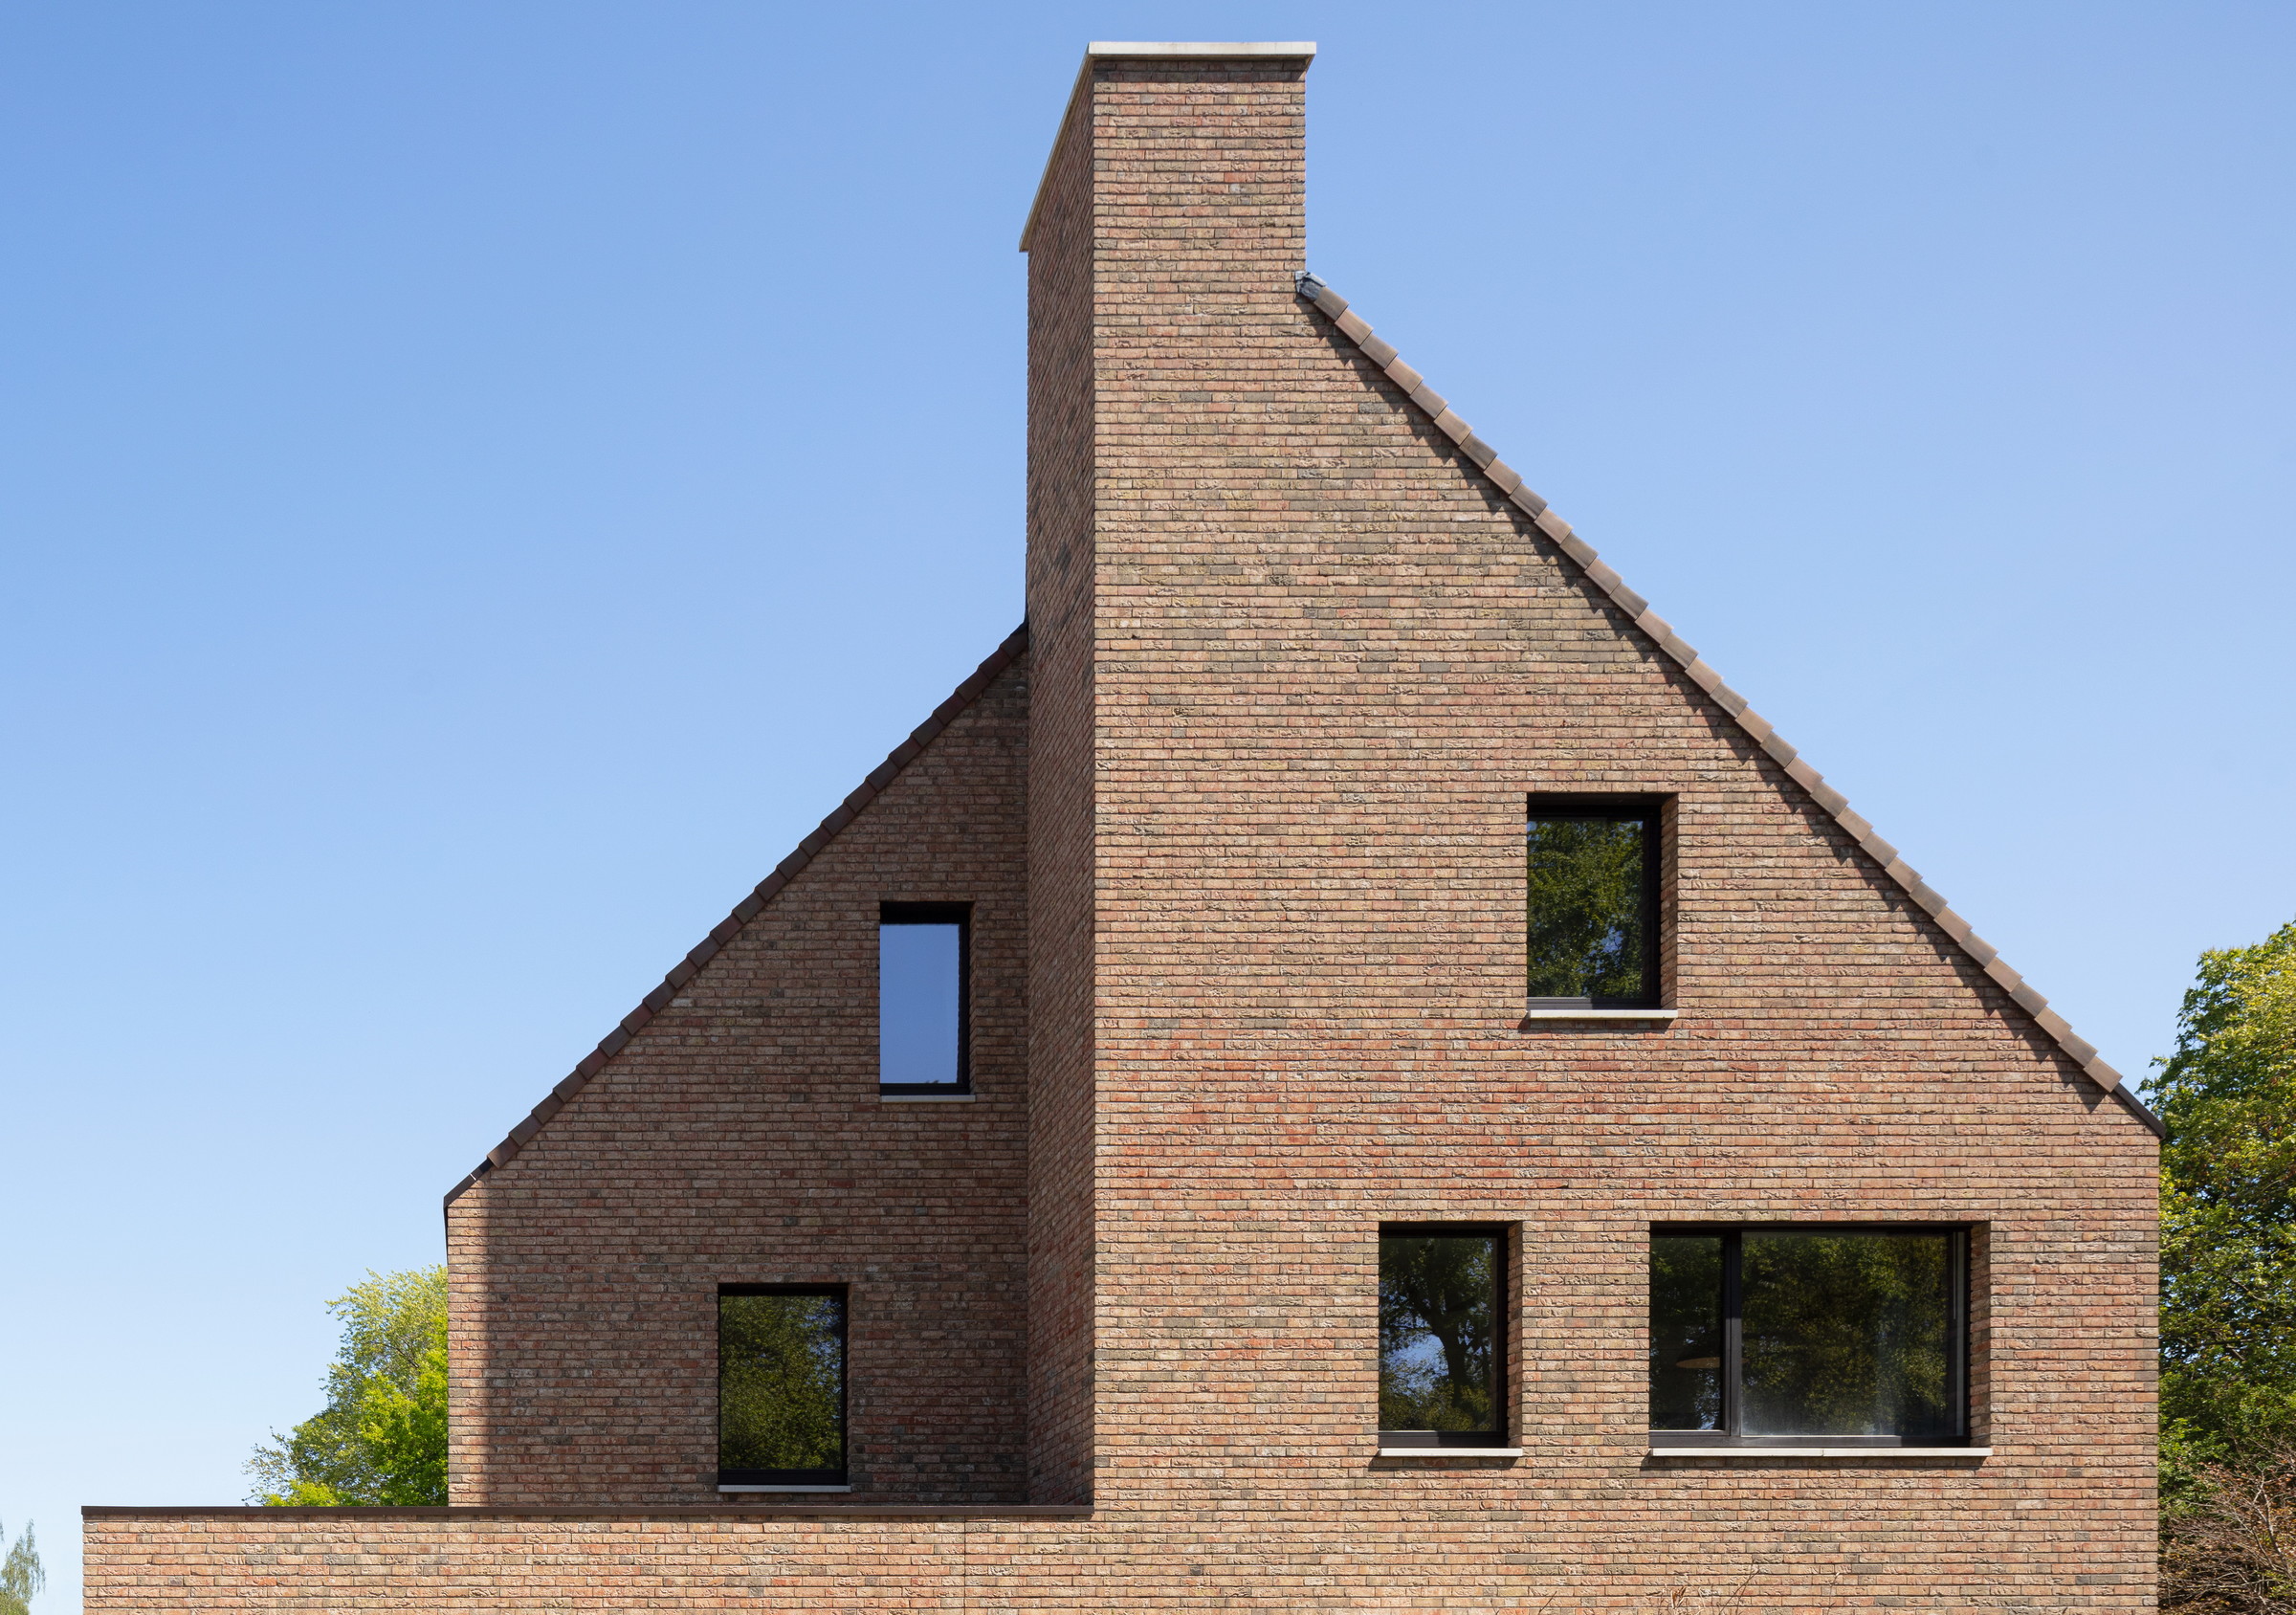 110-Zecc_Architecten-Monnickenhof-Amersfoort-housing.JPG